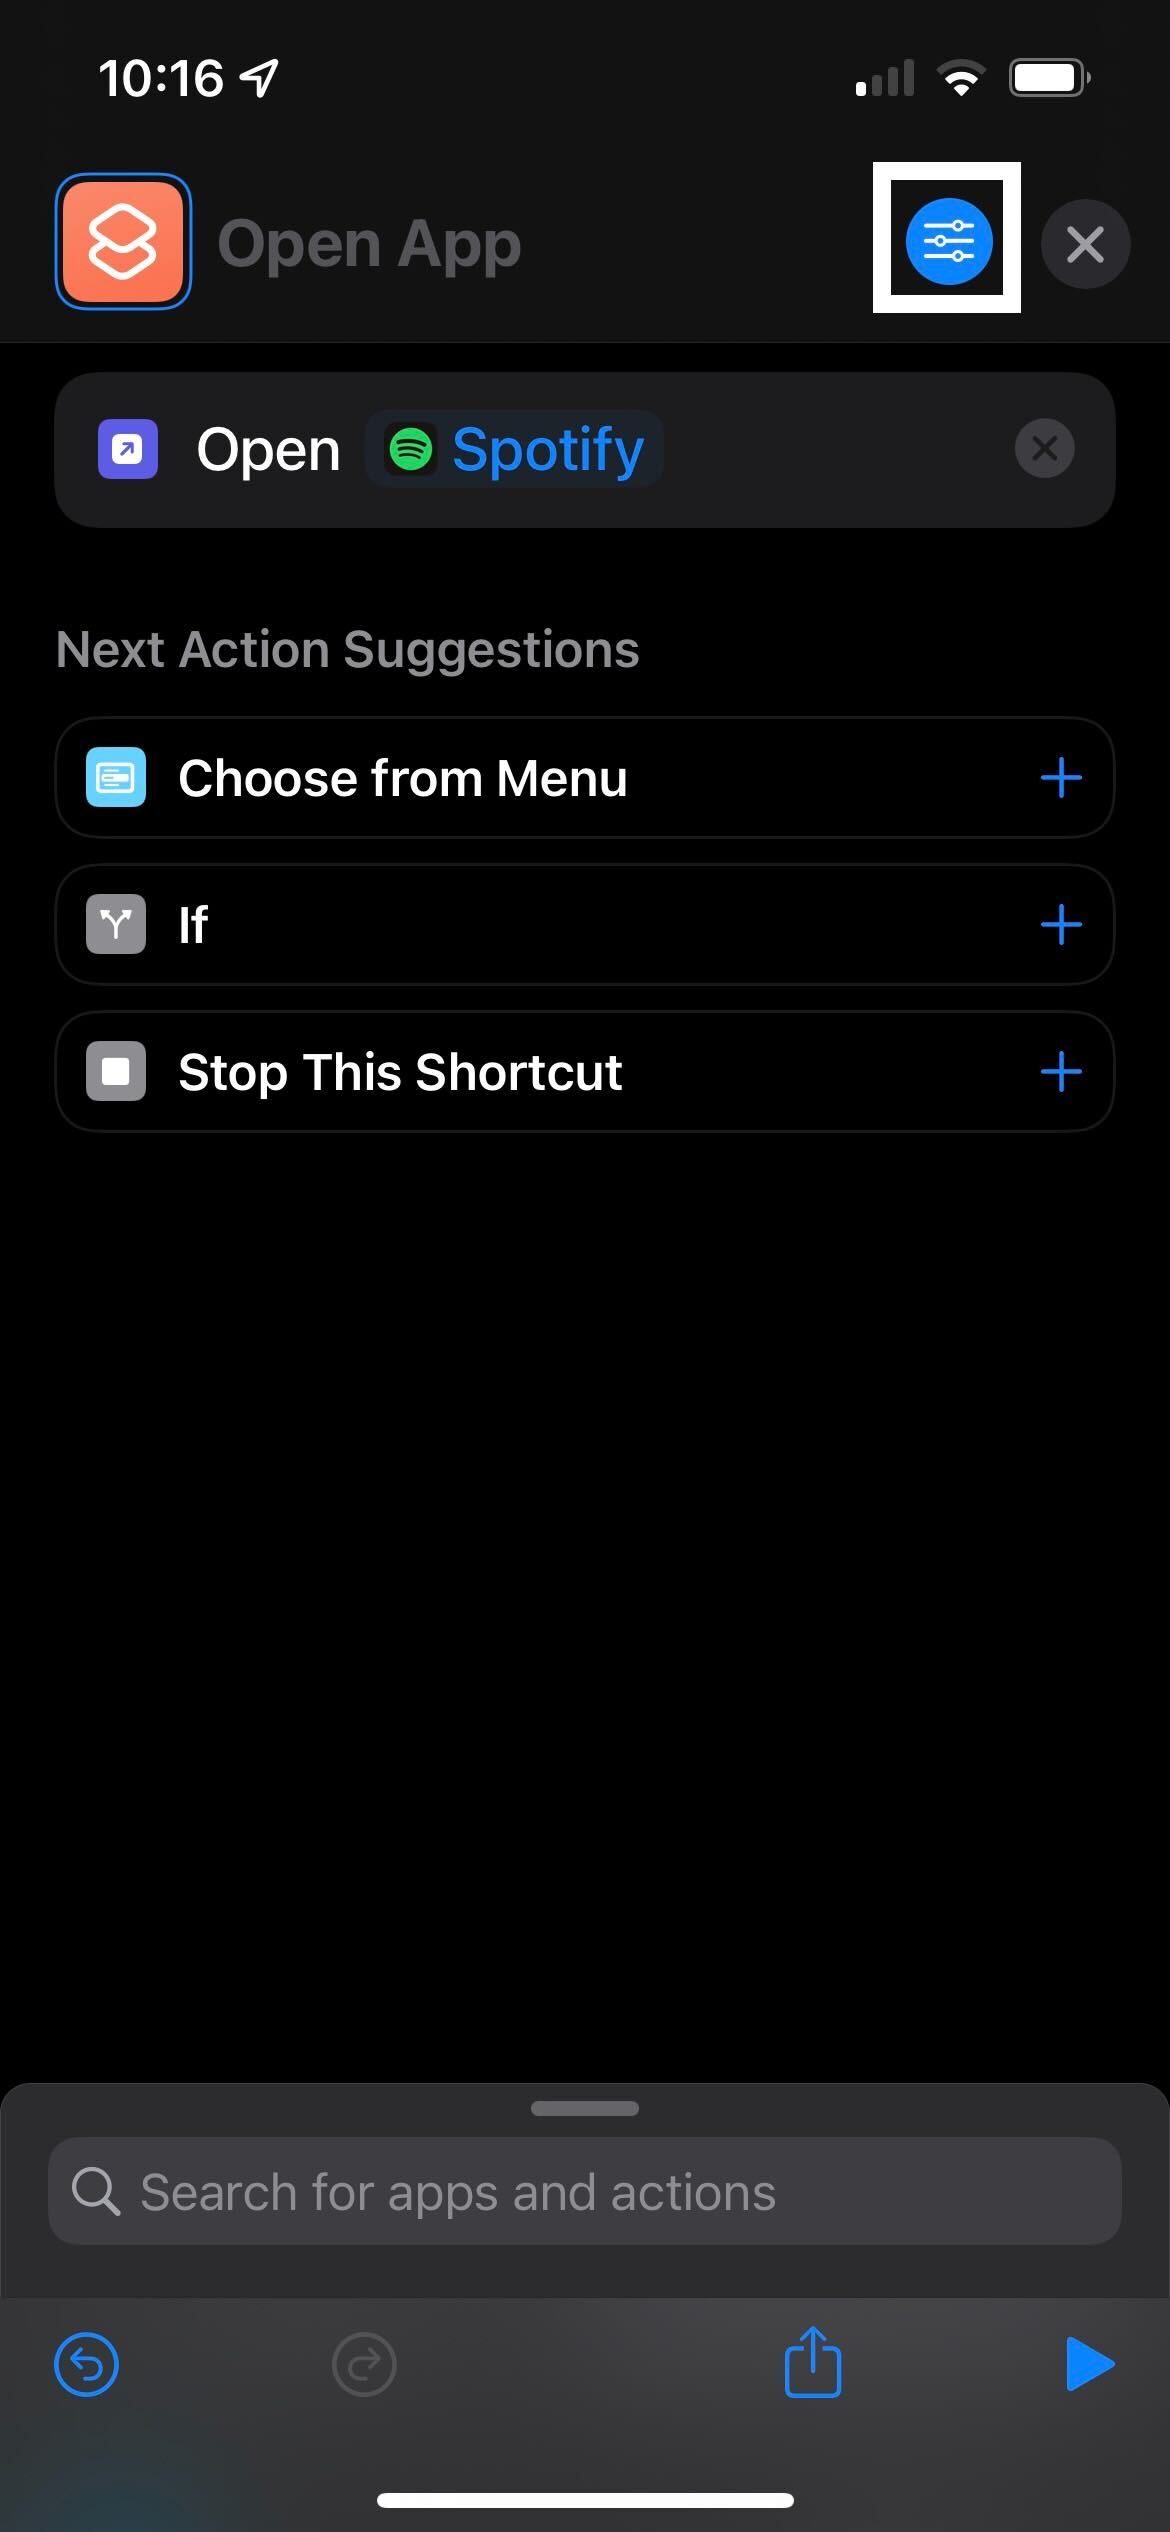 The blue hamburger button on iOS